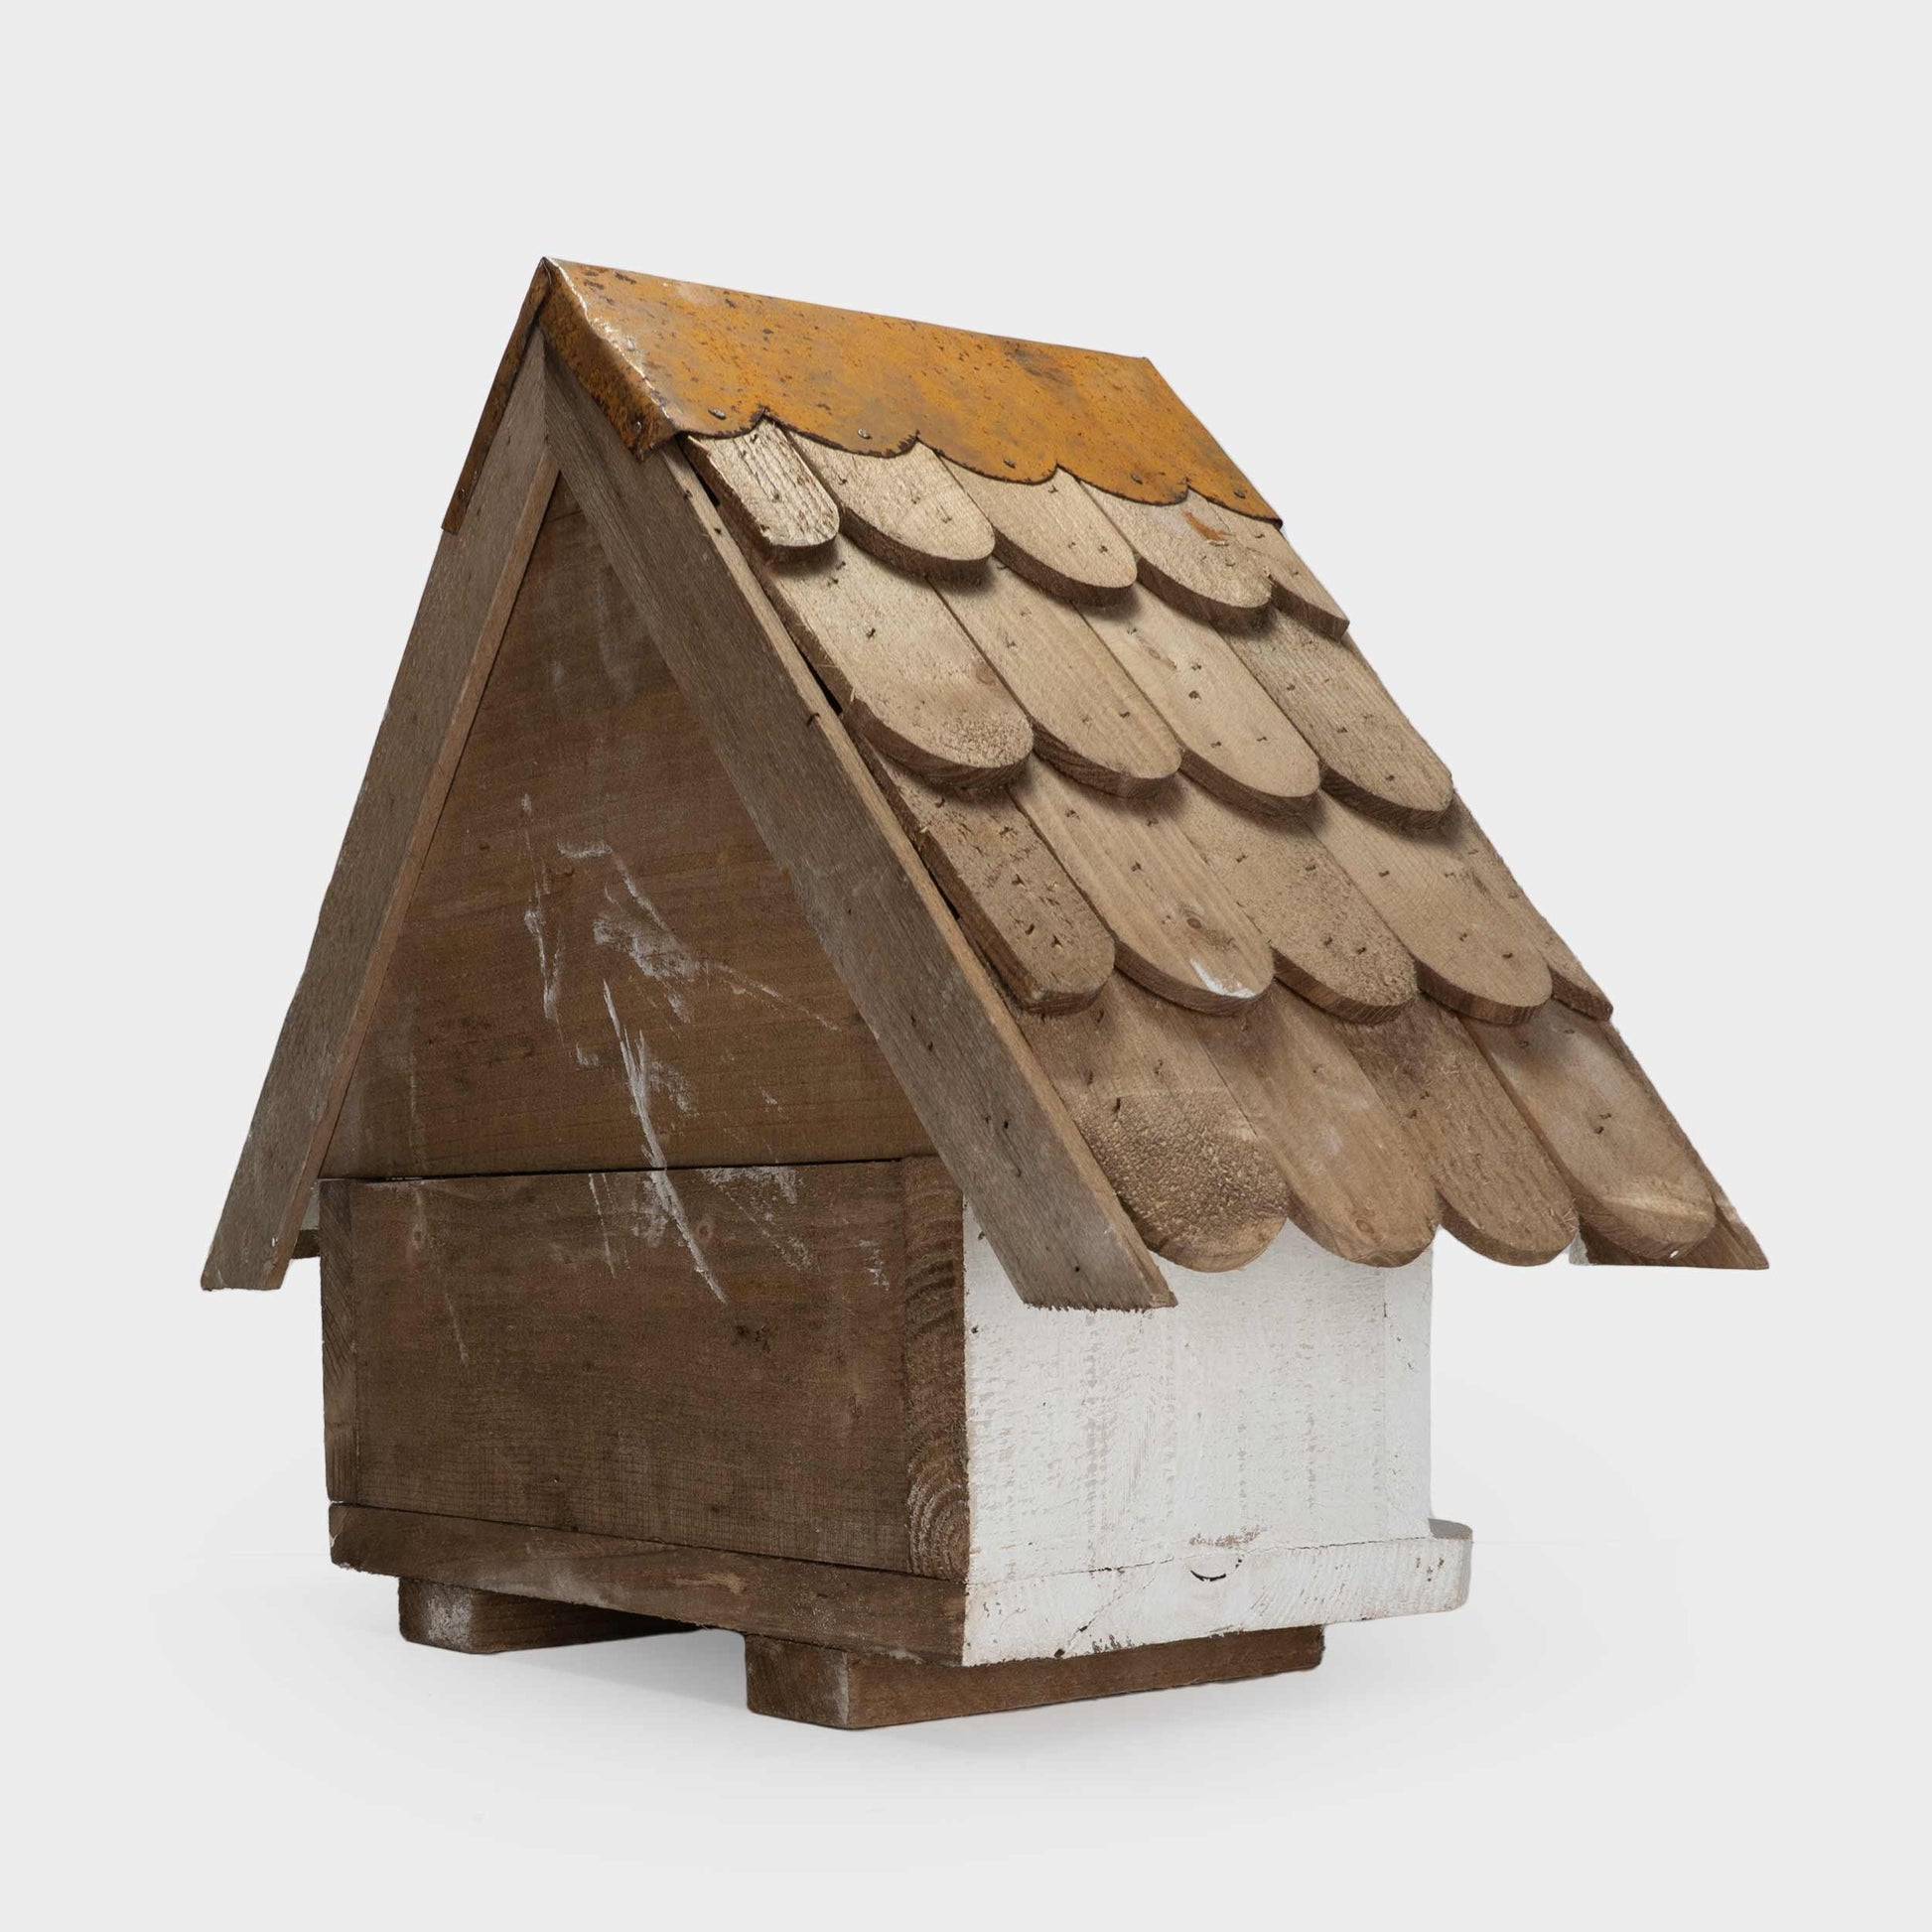 (Waitlist) English 2 Tier Handmade Birdhouse in Reclaimed Pine